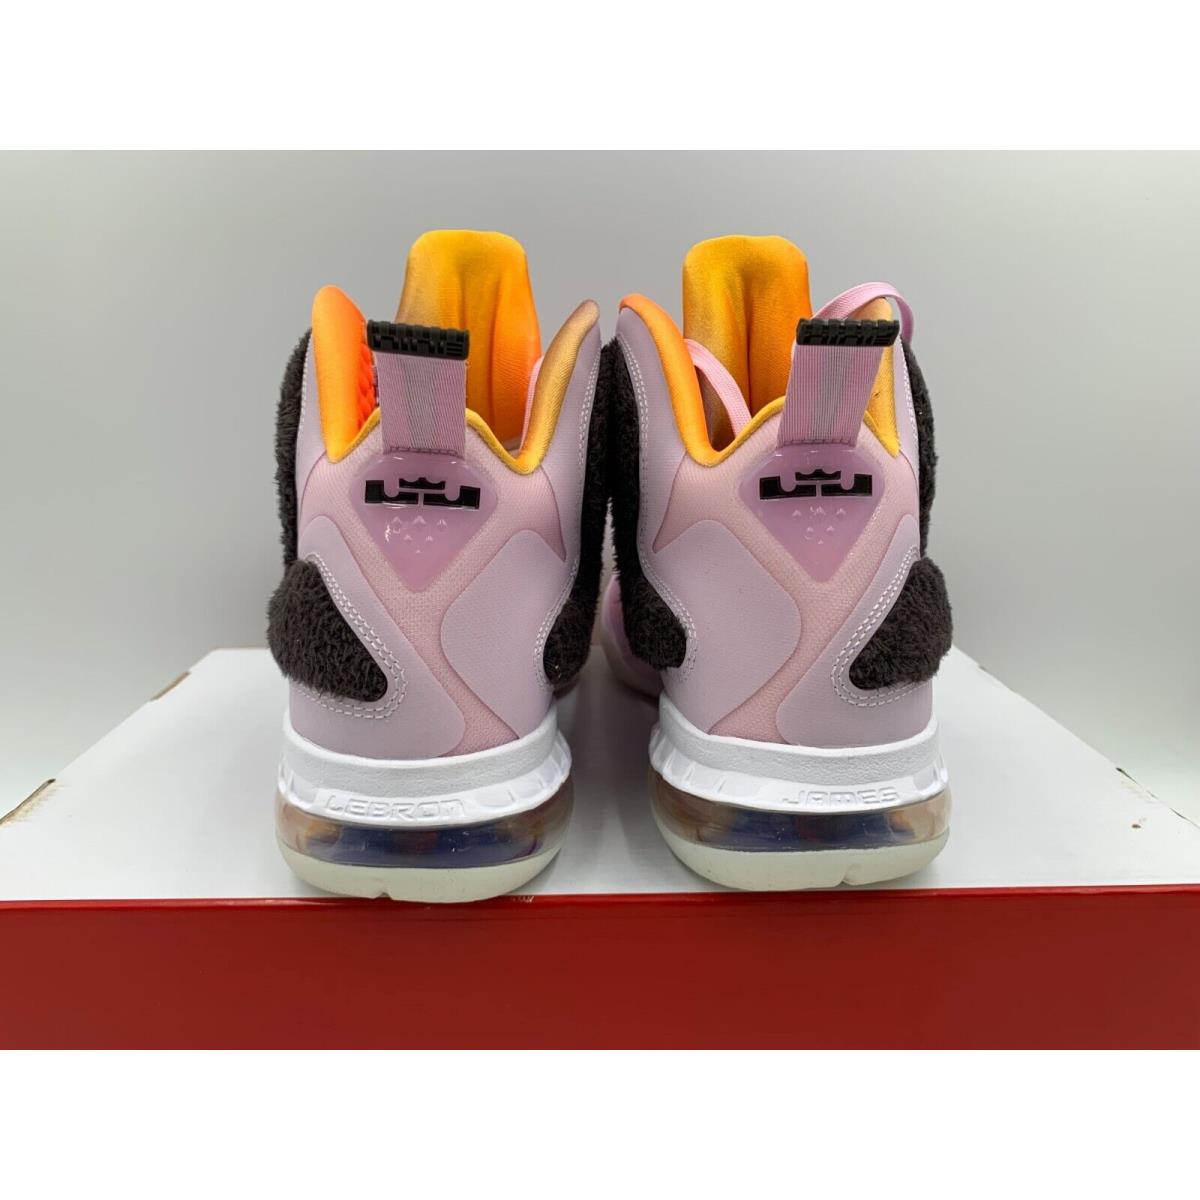 Nike shoes LeBron - Pink Multi 5